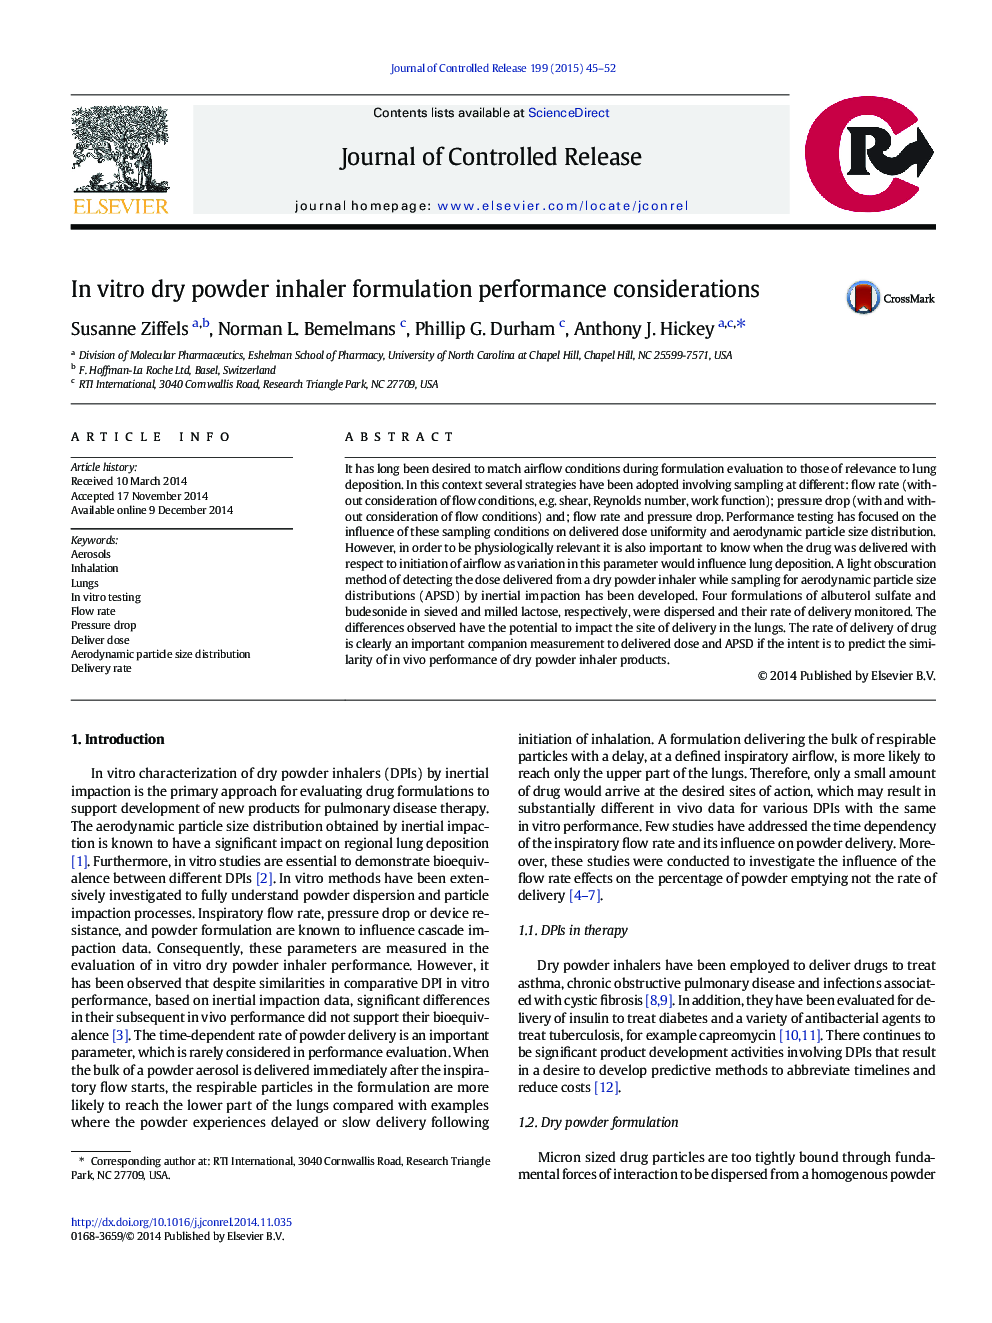 In vitro dry powder inhaler formulation performance considerations